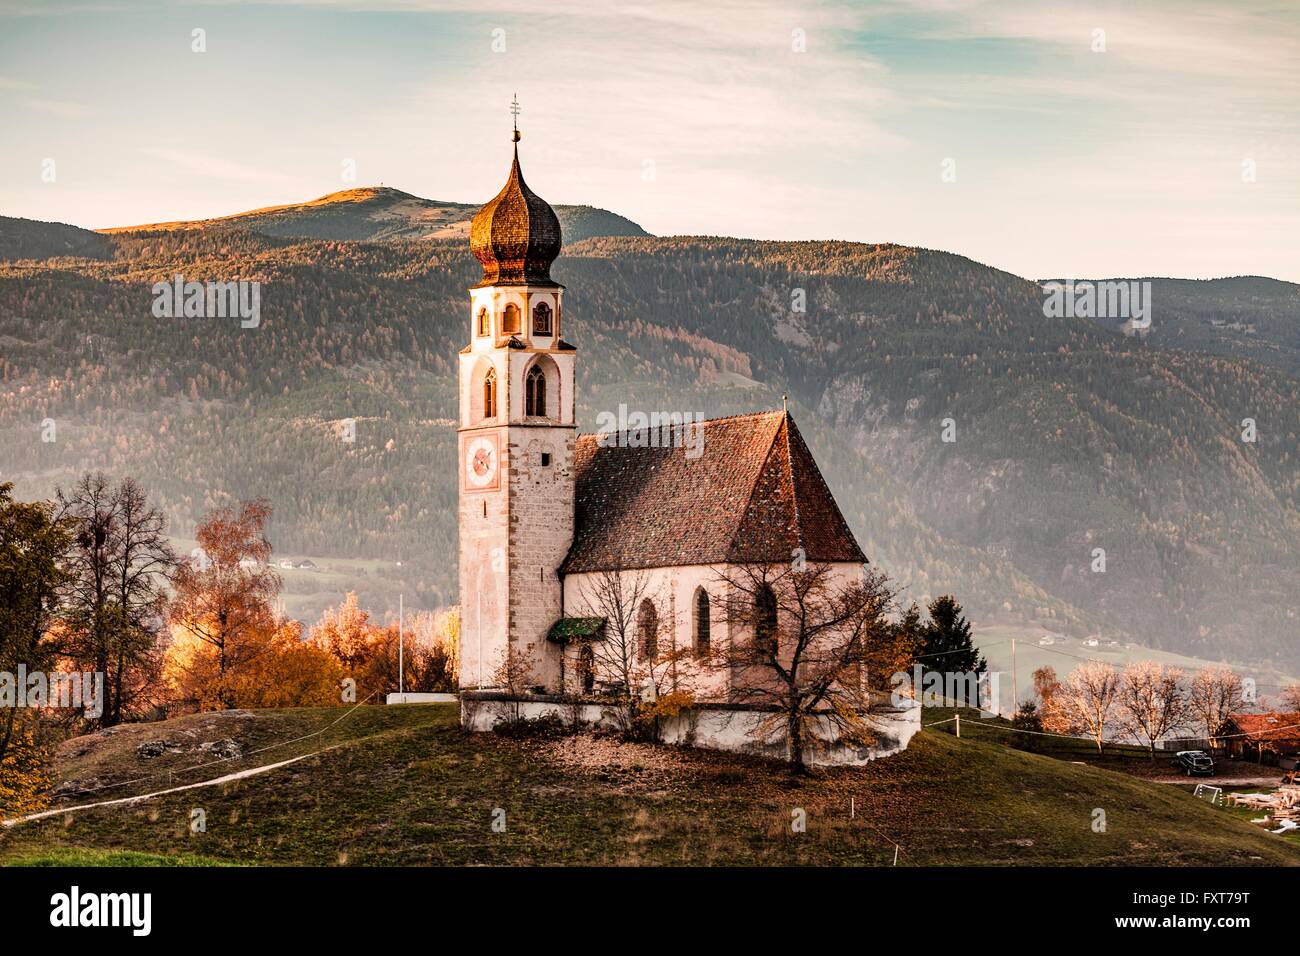 Traditionelle Kirche auf Hügel, Dolomiten, Italien Stockfoto